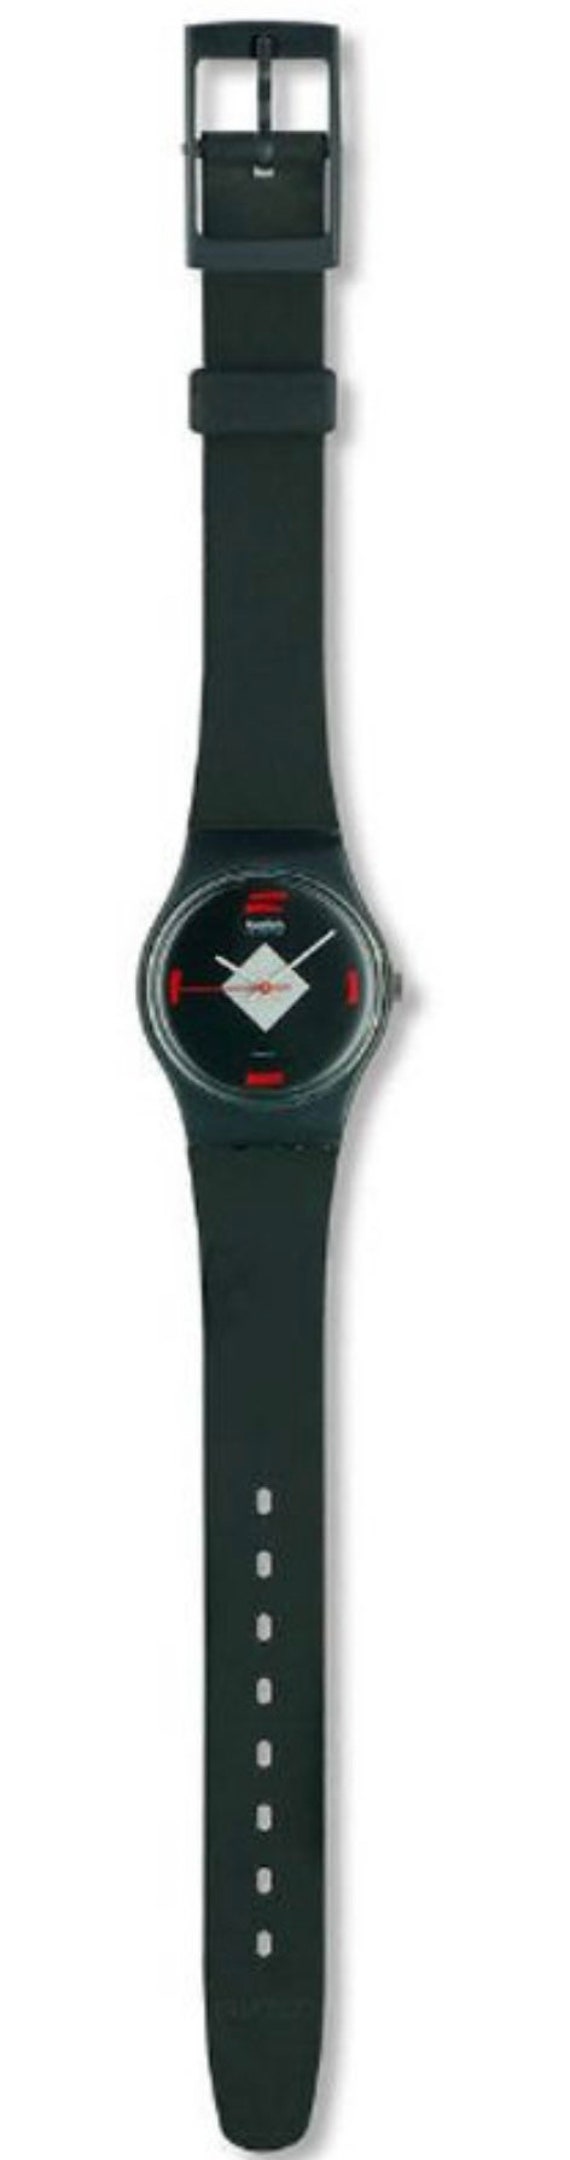 New 1984 Swatch Watch Vintage Mah-Jong LA101 new … - image 5